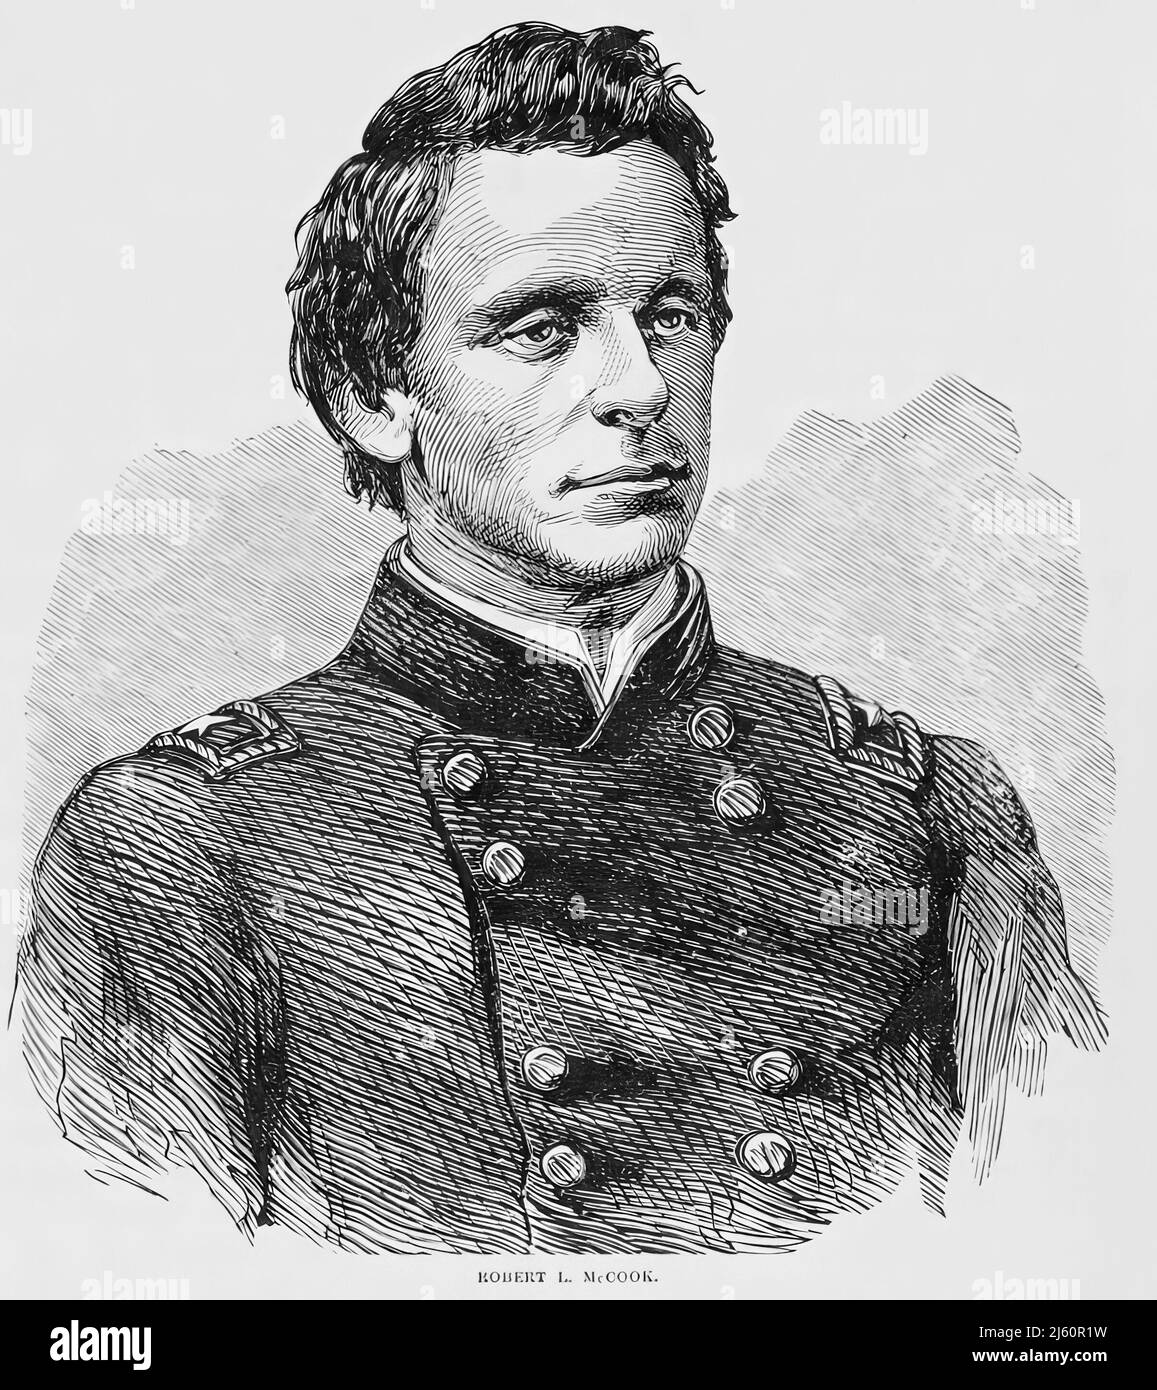 Portrait of Robert Latimer McCook, Union Army General in the American Civil War. 19th century illustration Stock Photo